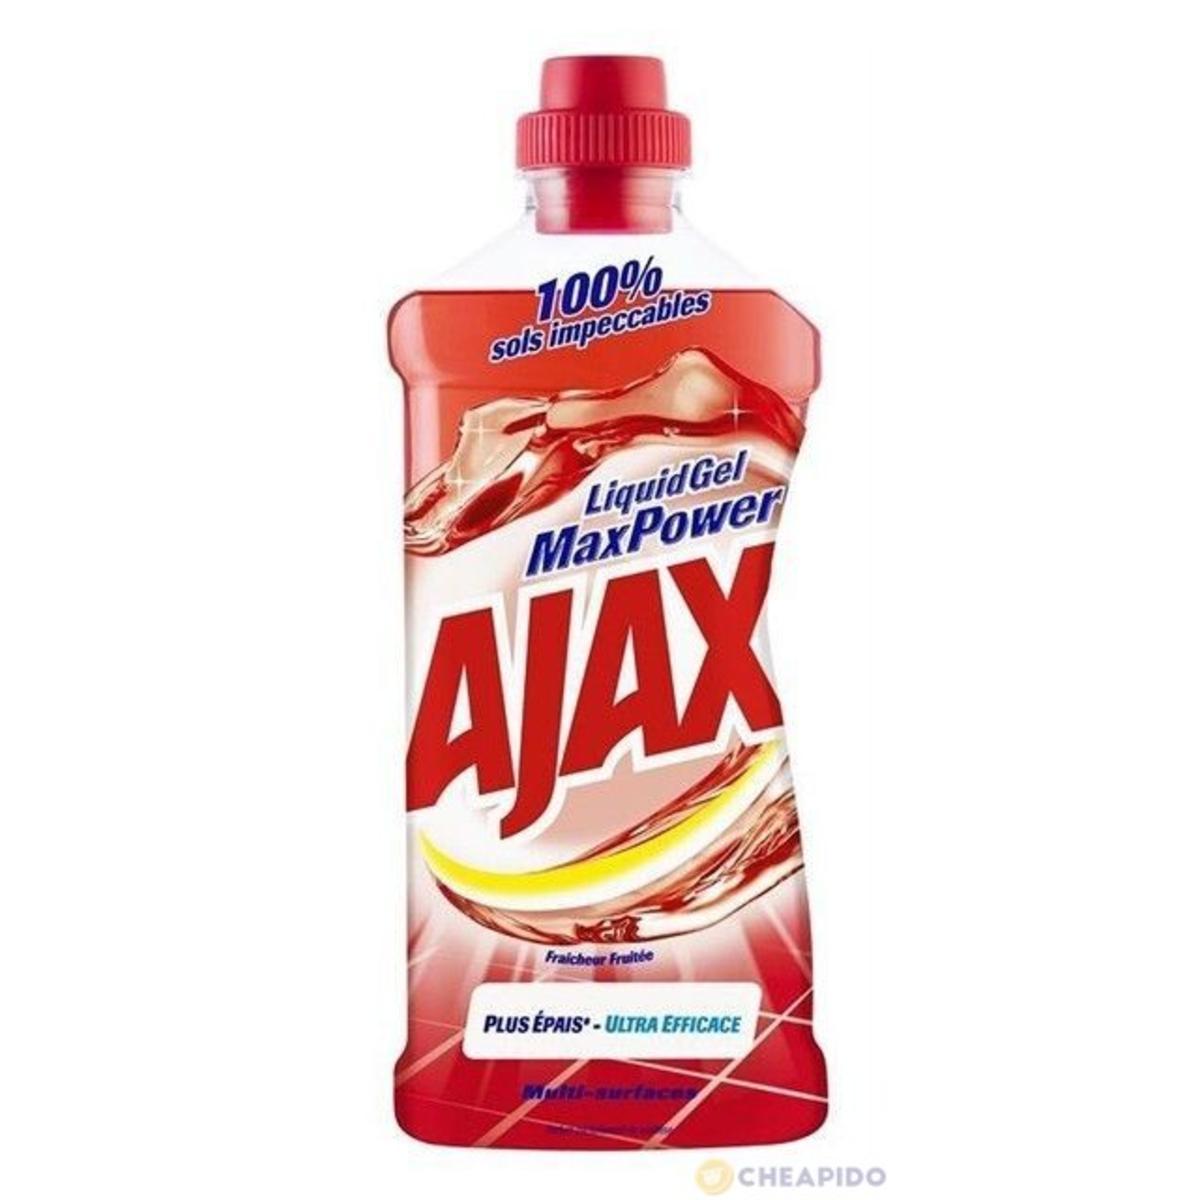 Nettoyant multiusage parfum fraicheur - 750 ml - AJAX